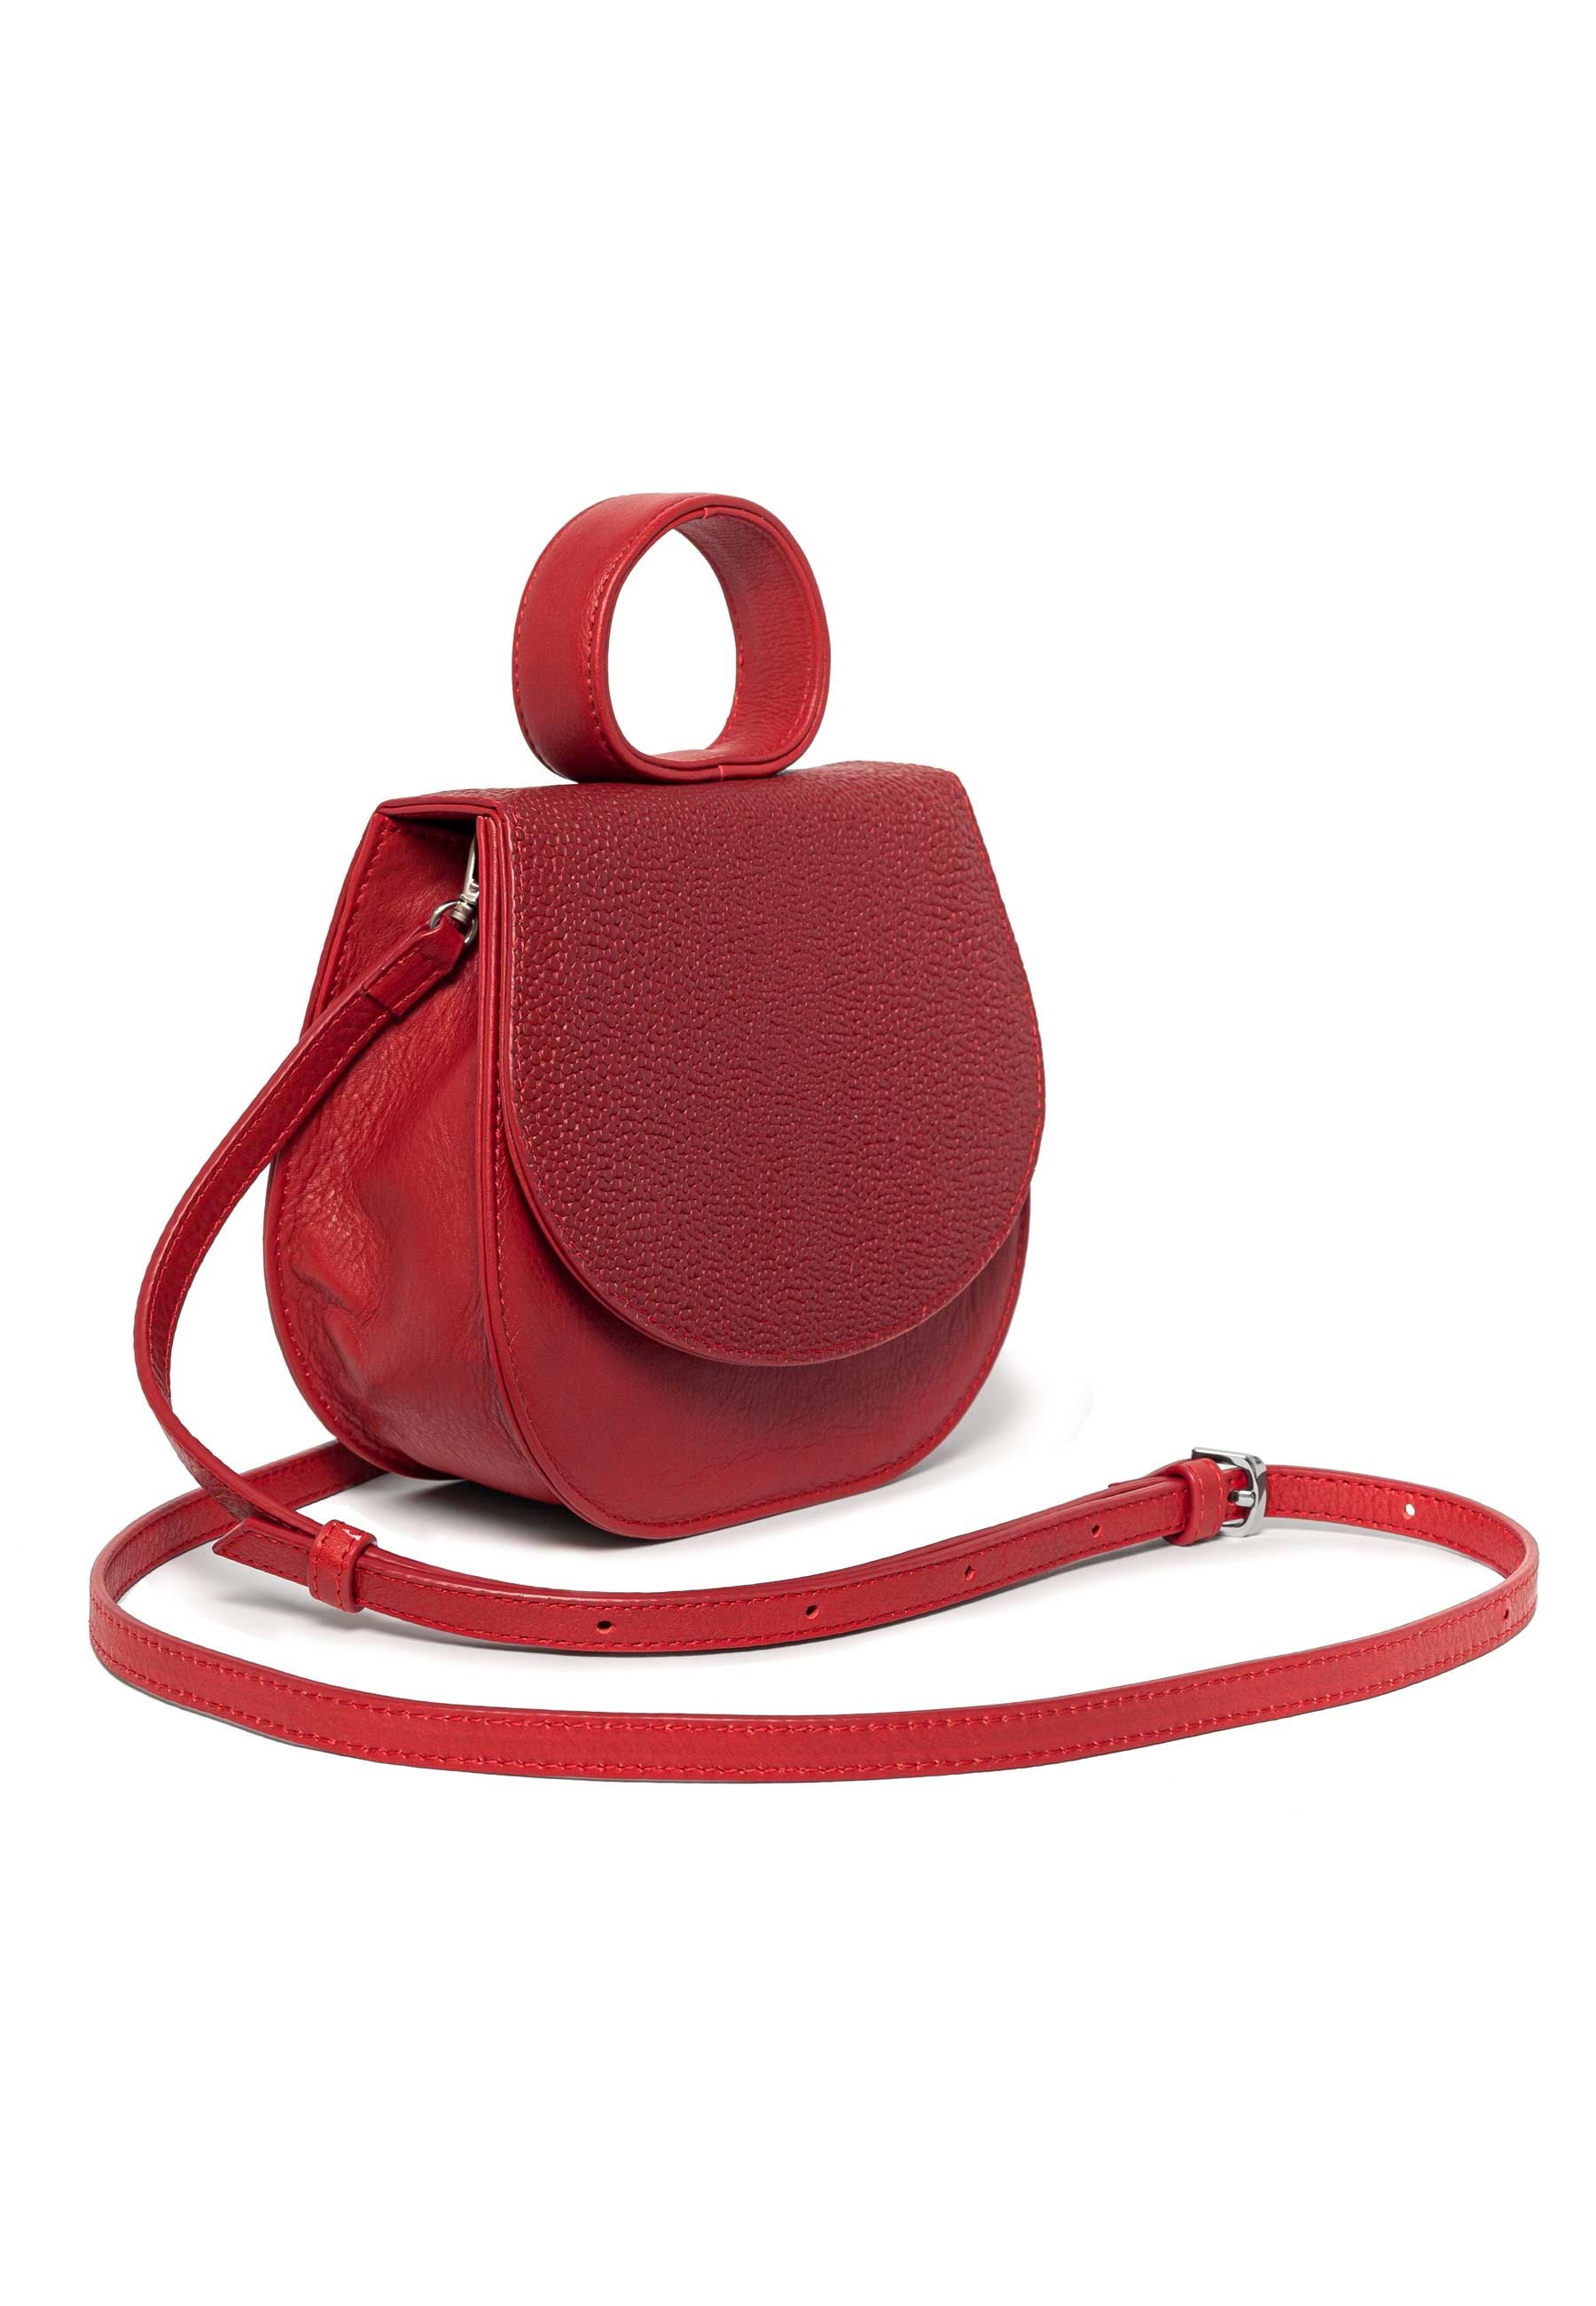 GRETCHEN Schultertasche »Ebony Mini Loop Bag«, aus italienischem Kalbsleder